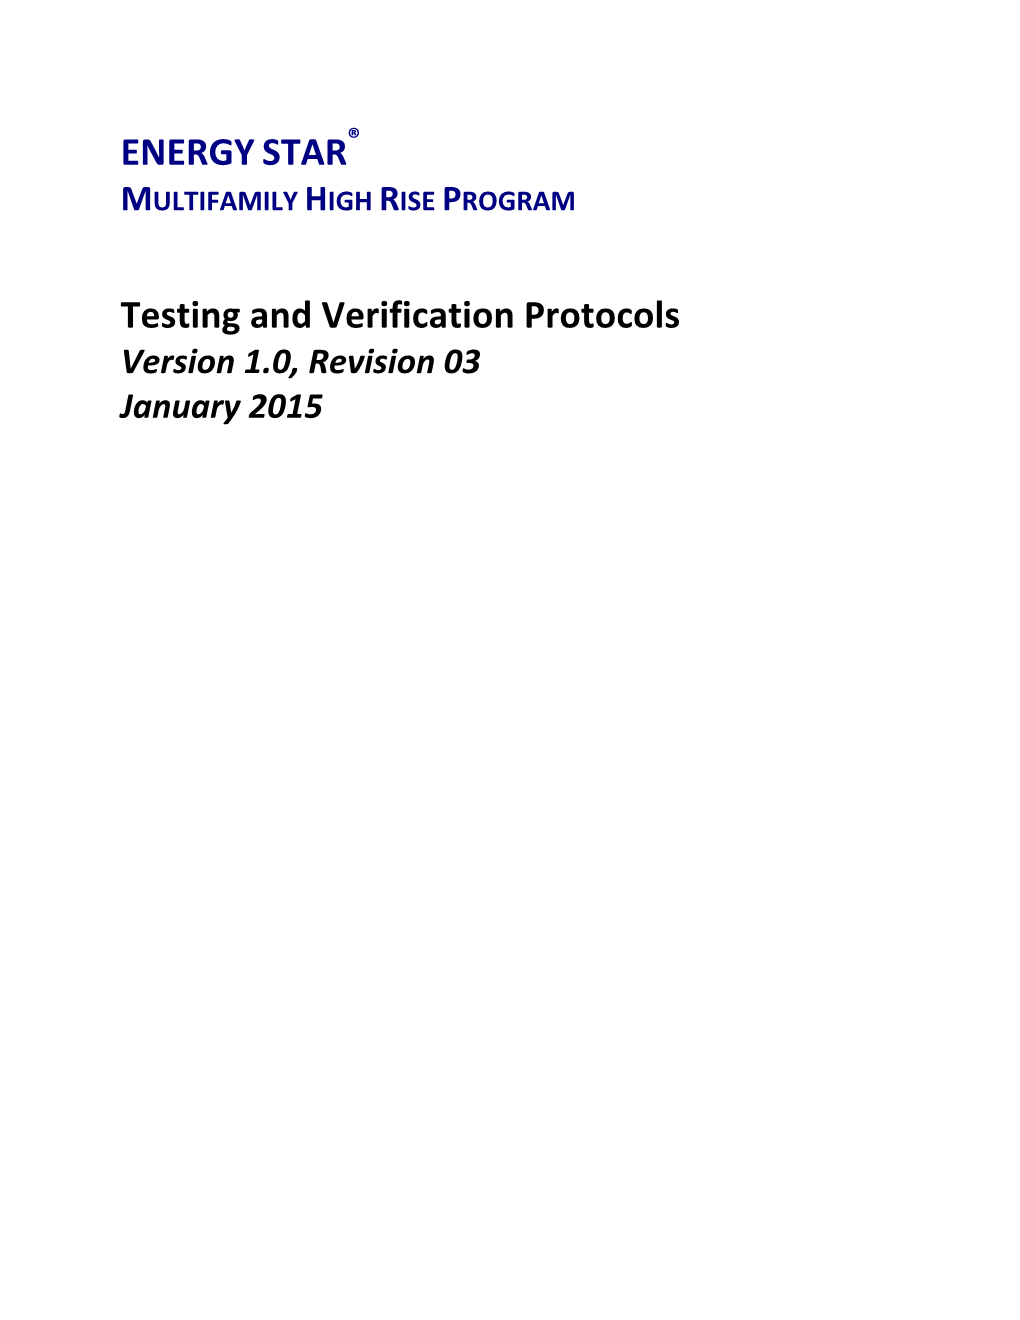 ENERGYSTAR Testing and Verification Protocols